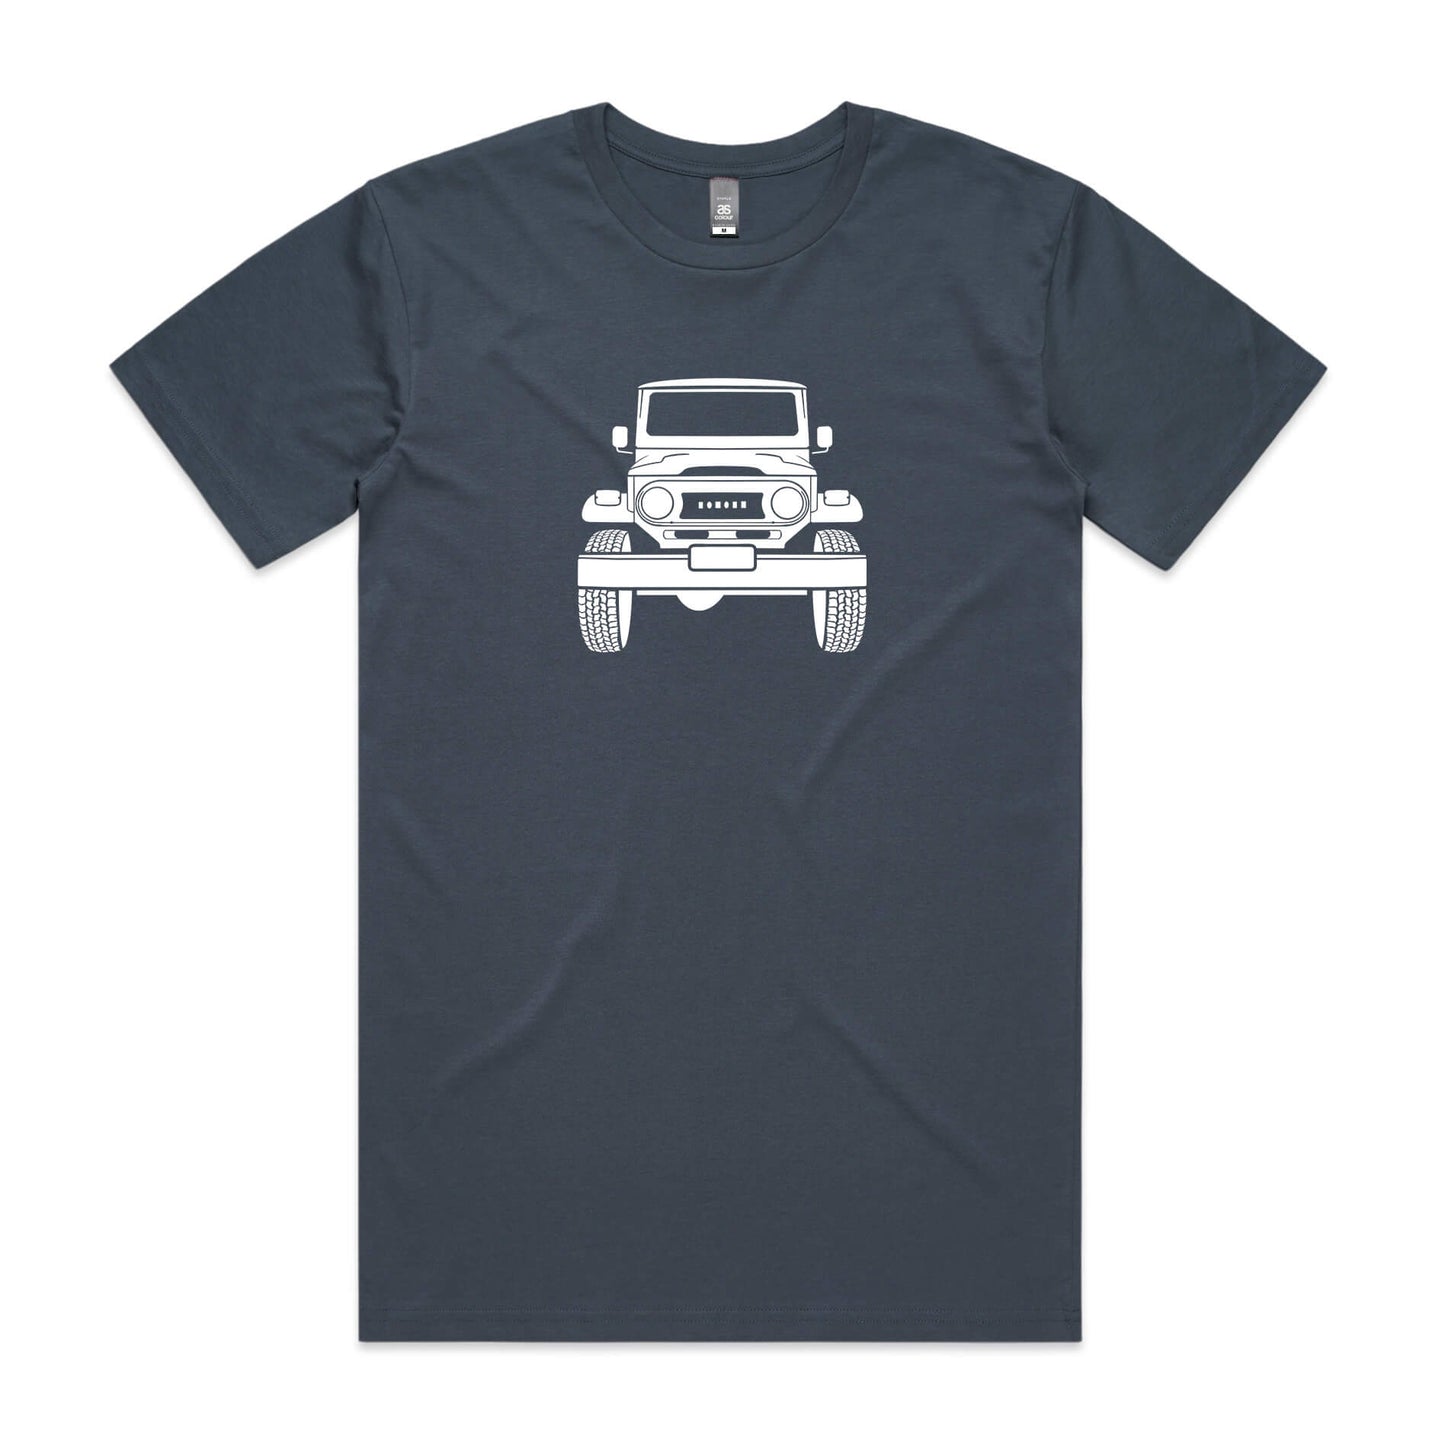 Toyota LandCruiser FJ40 t-shirt in Petrol